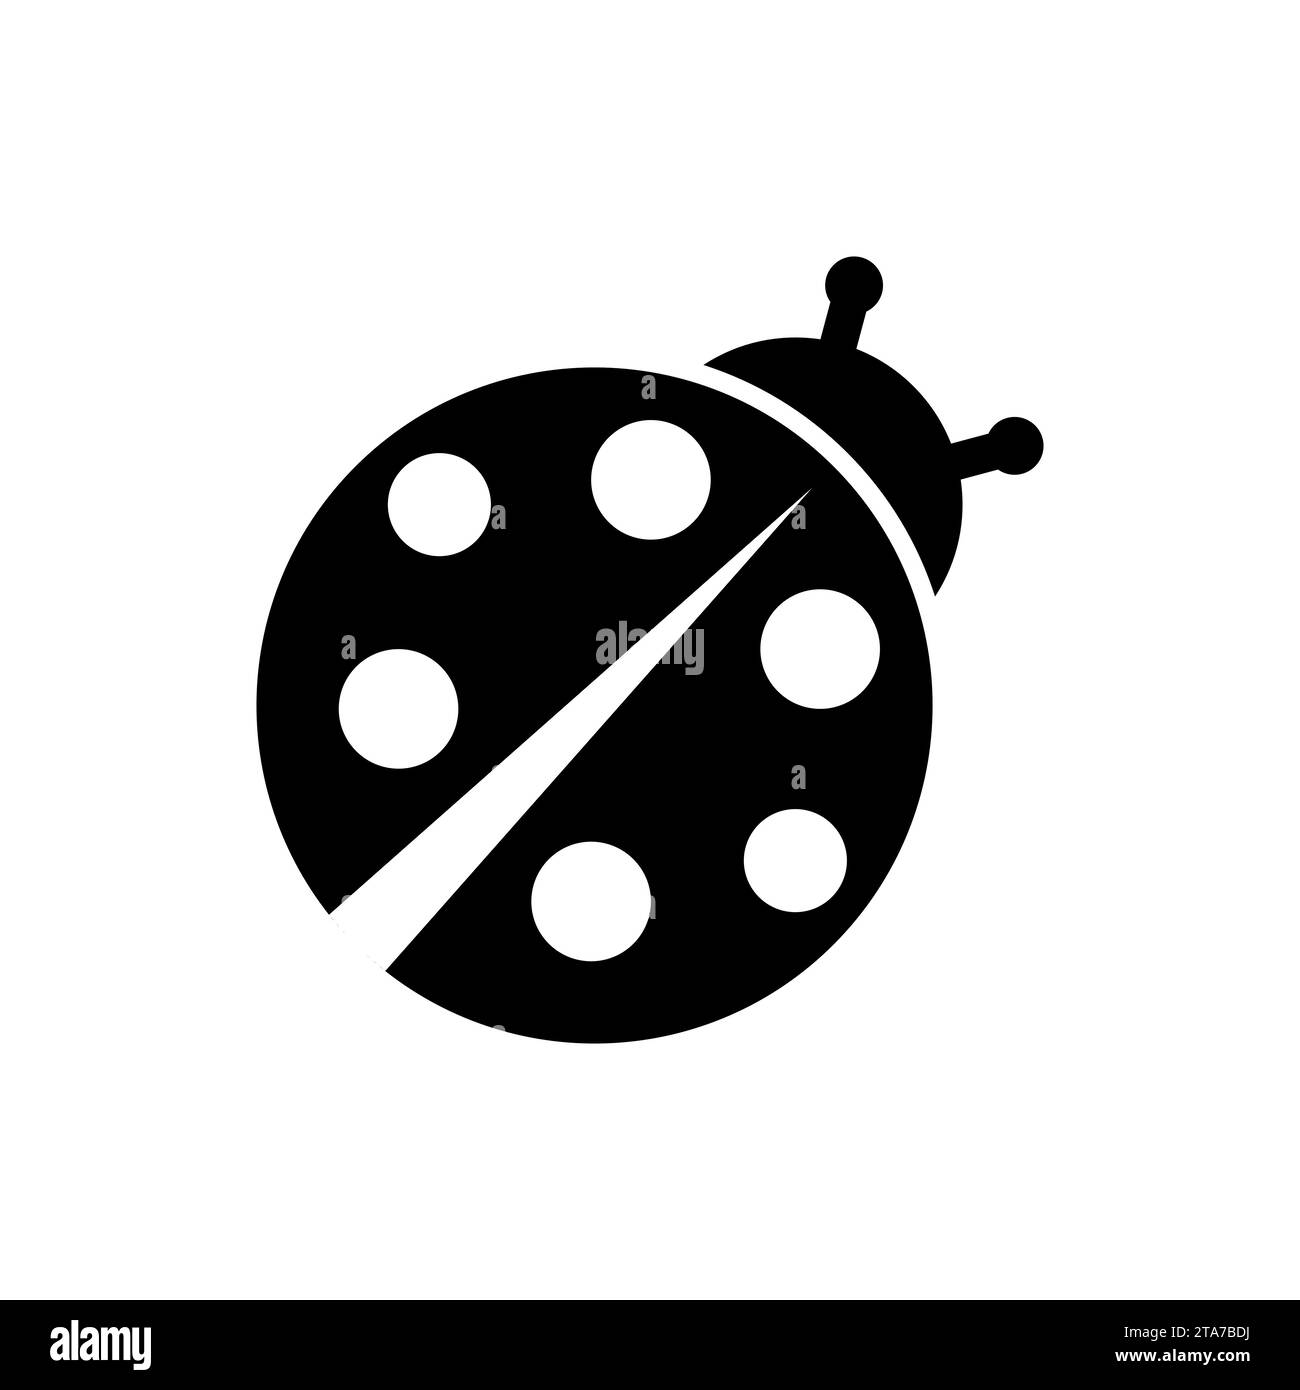 Icona Ladybug isolata su sfondo bianco. Illustrazione vettoriale. Illustrazione Vettoriale